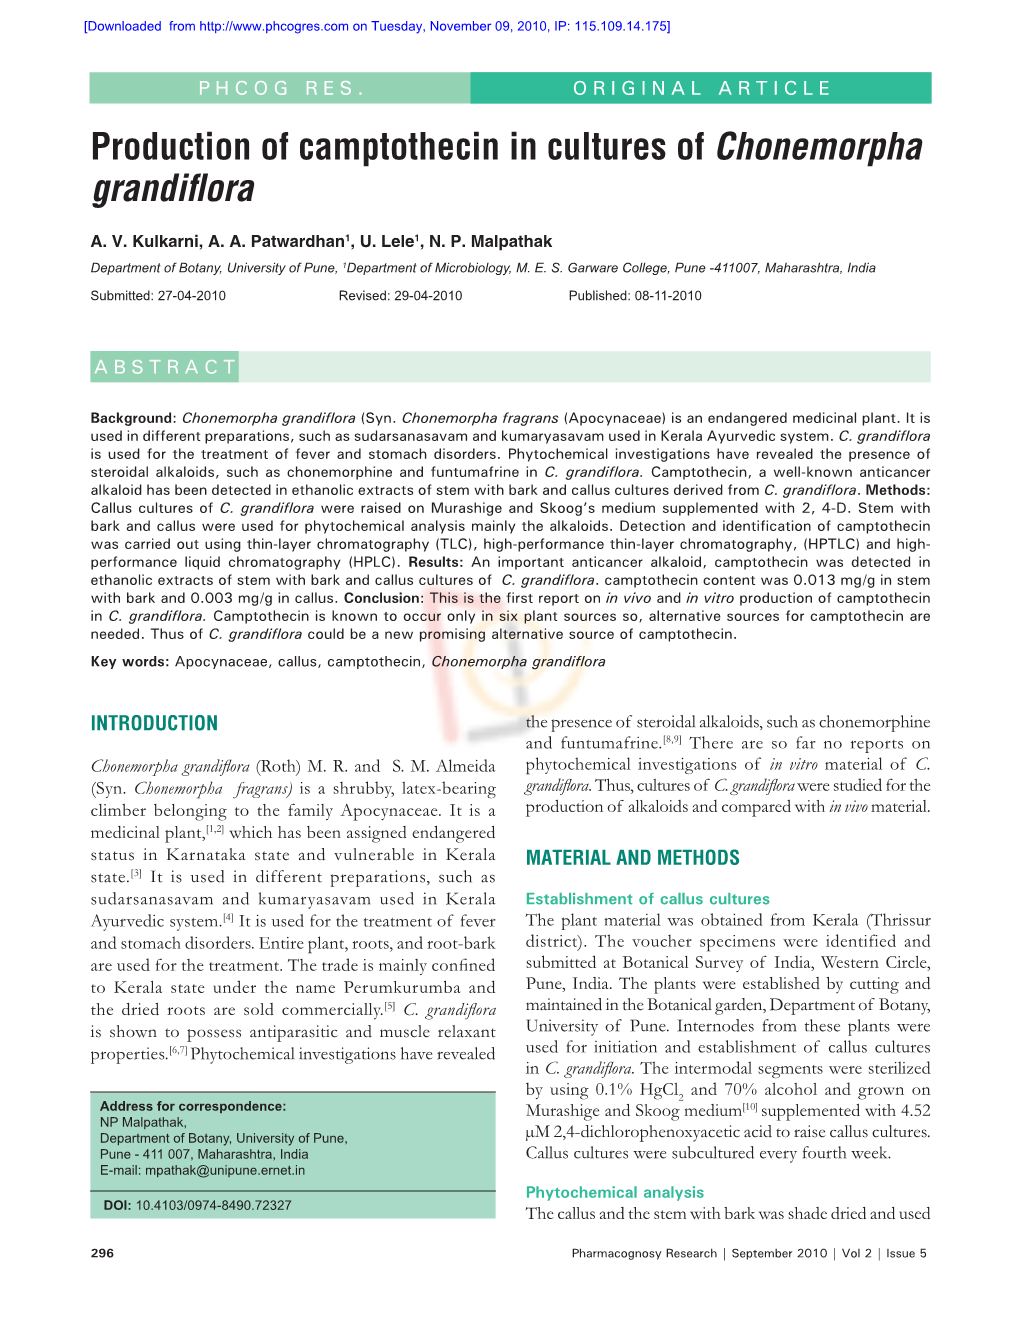 Production of Camptothecin in Cultures of Chonemorpha Grandiflora